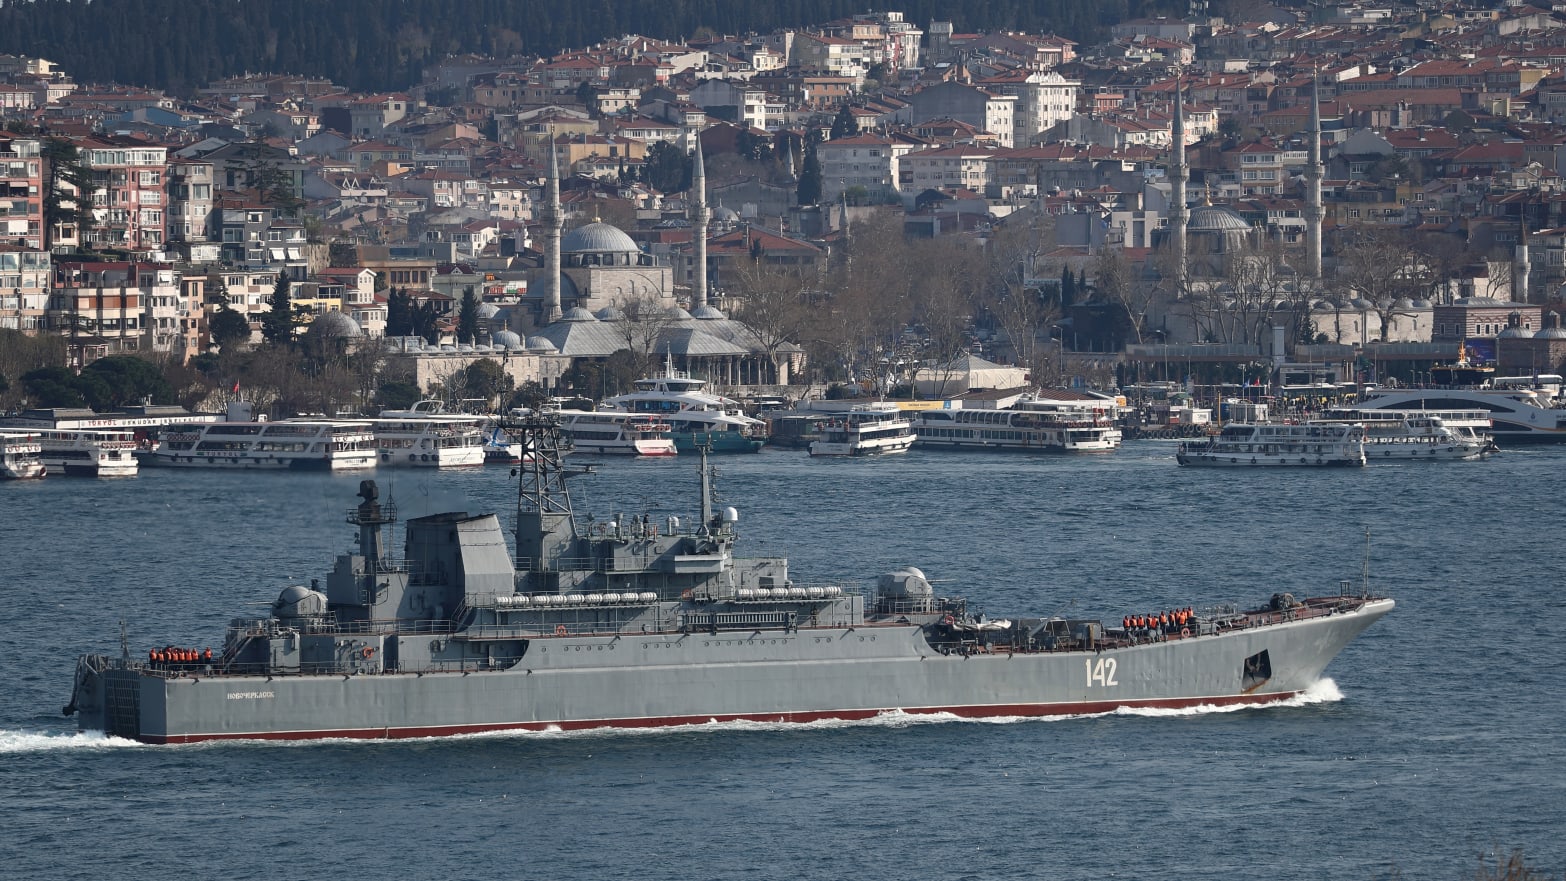 Russian Navy's large landing ship Novocherkassk sets sail in Bosphorus